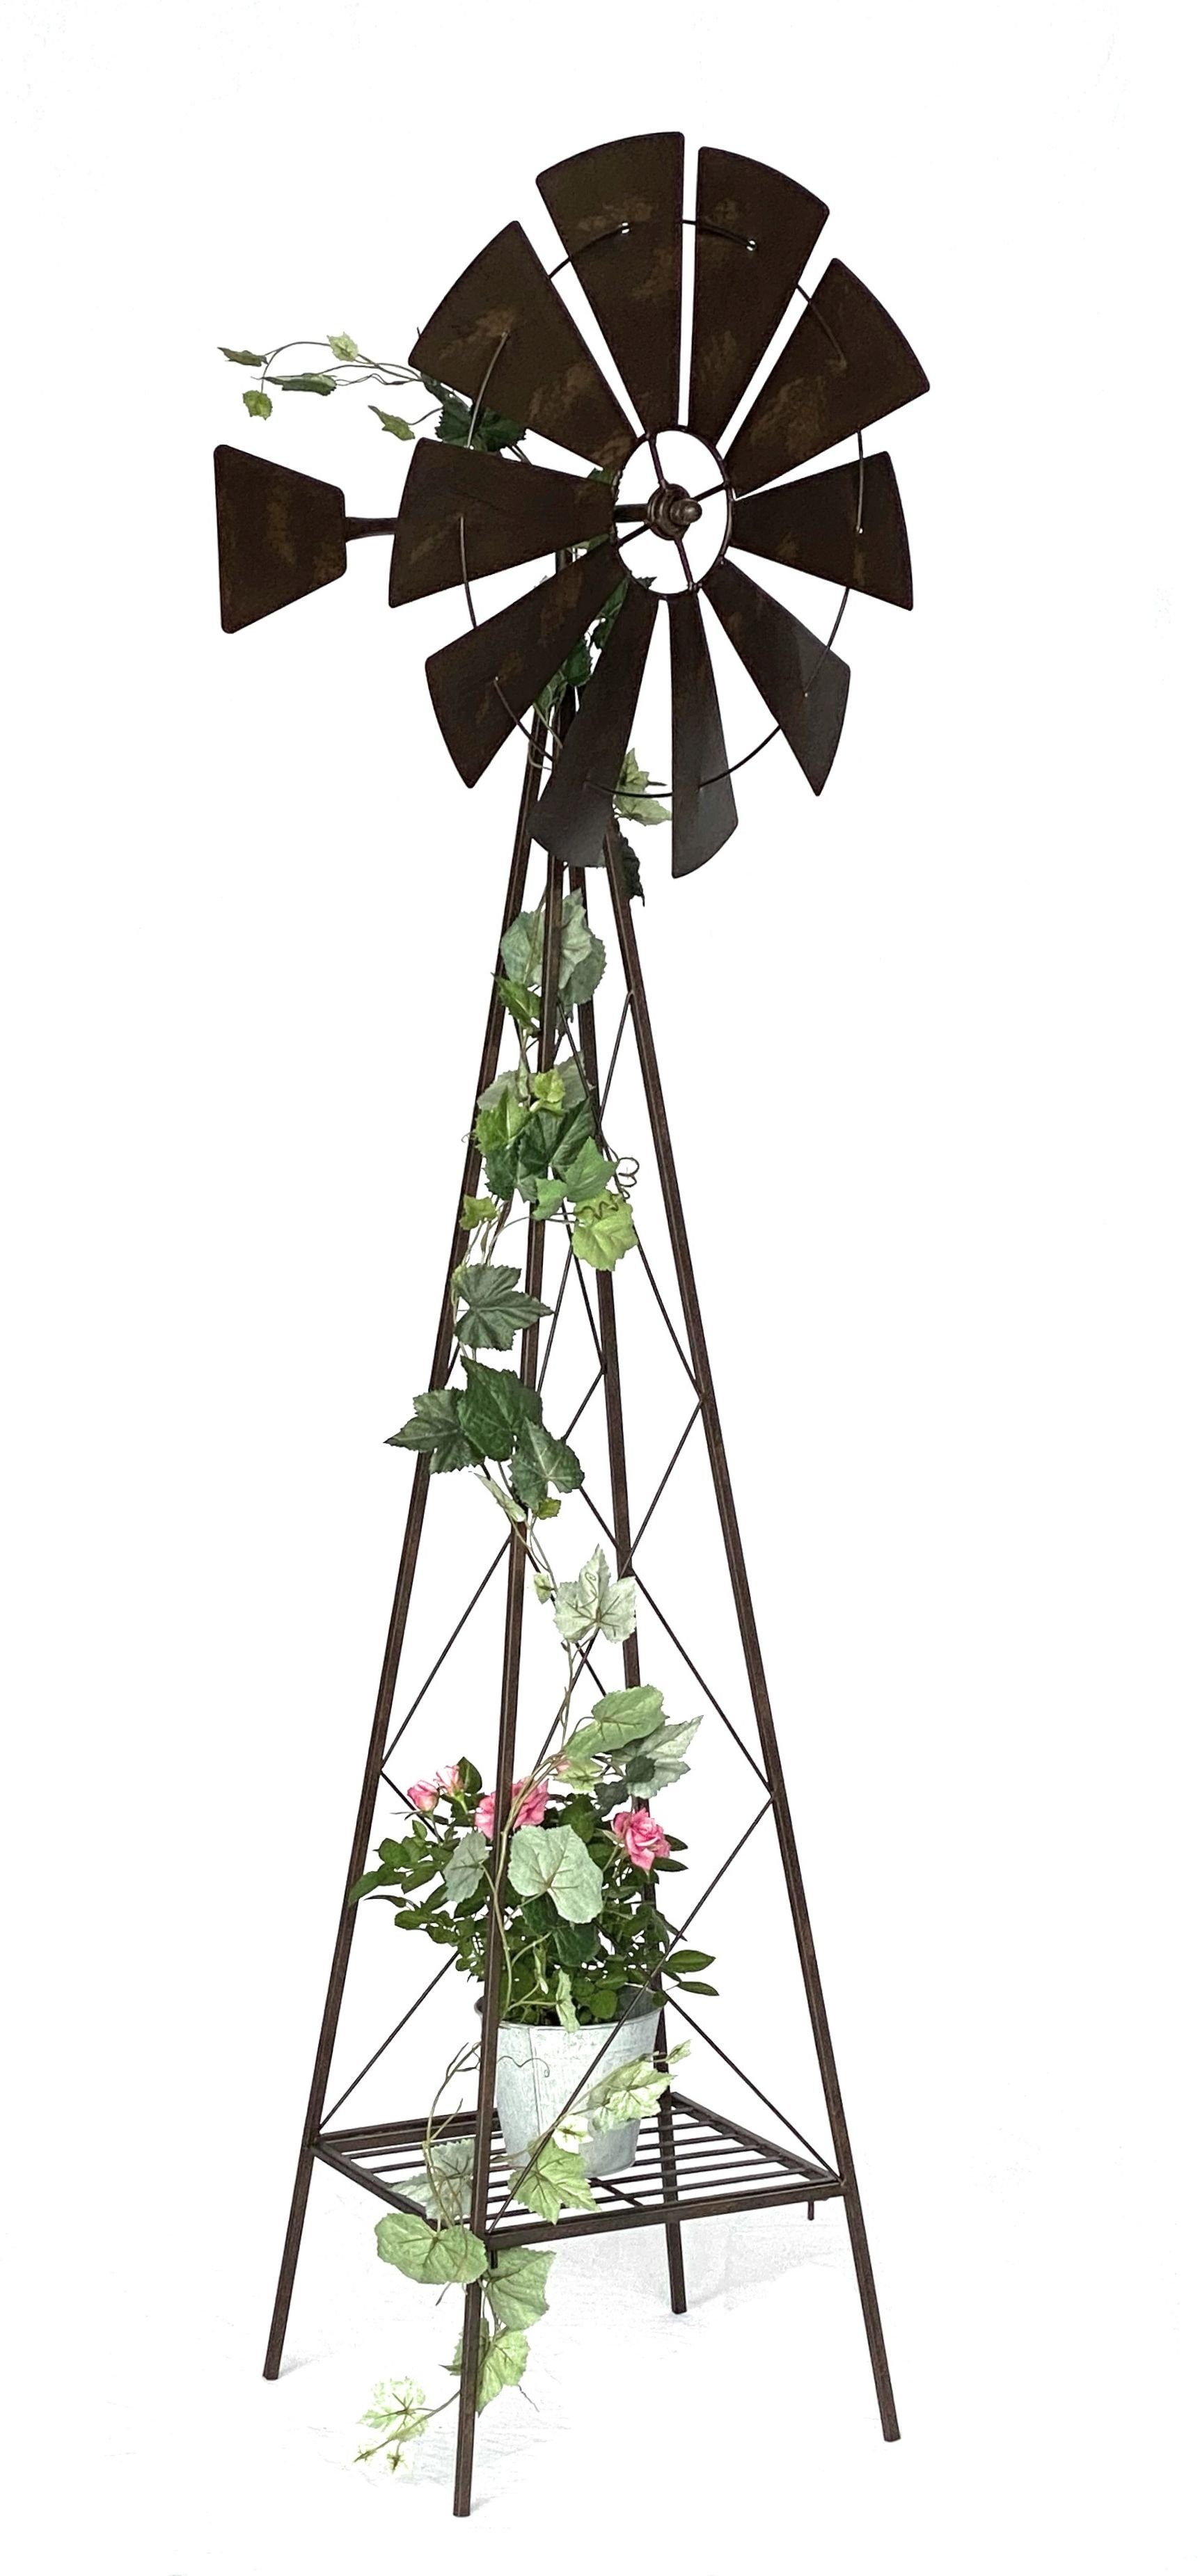 Braun Metall cm Deko-Windrad DanDiBo Garten Windspiel Gartenstecker Windrad kugelgelagert 170 Windmühle Wetterfest Gartendeko 96019 Bodenstecker